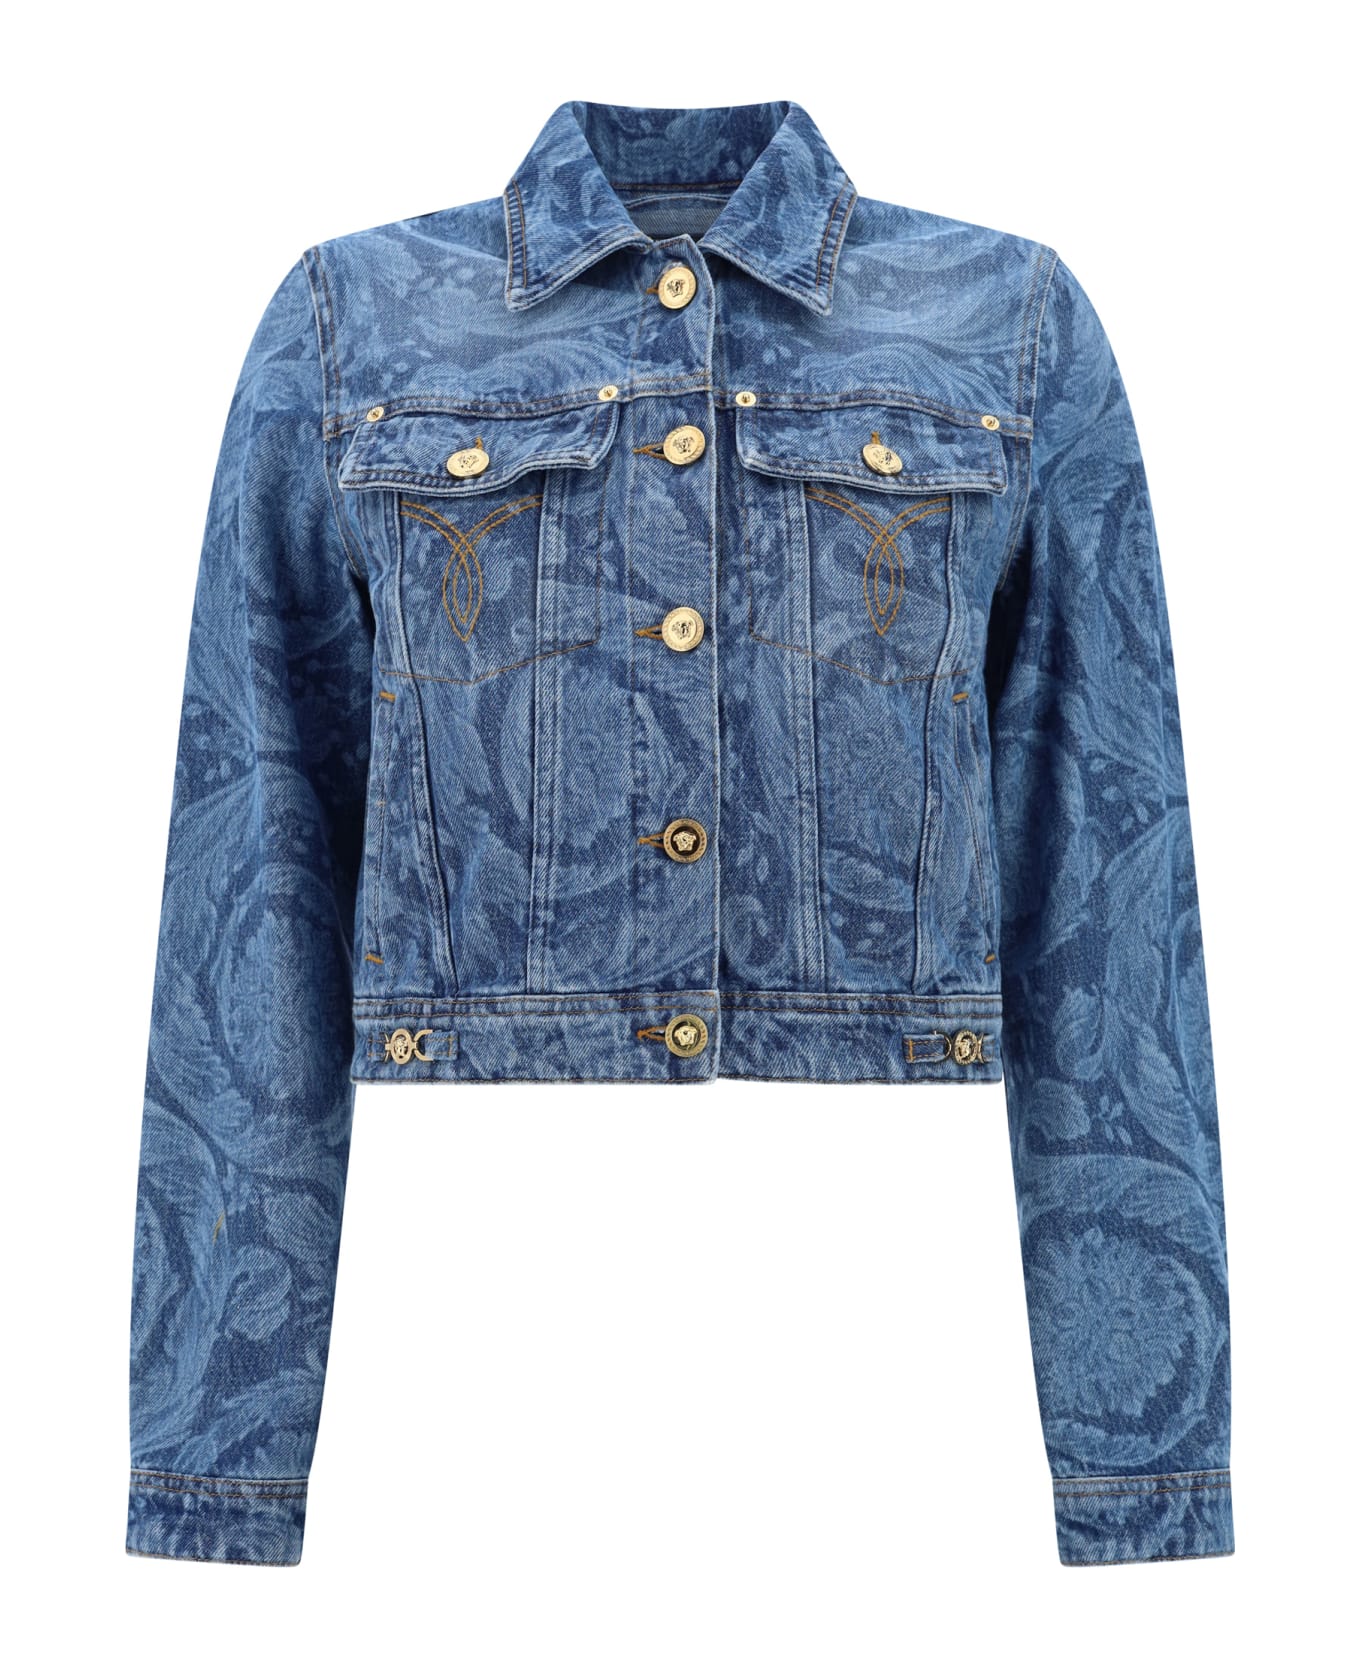 Versace Slim Fit Denim Jacket - Medium Blue ジャケット